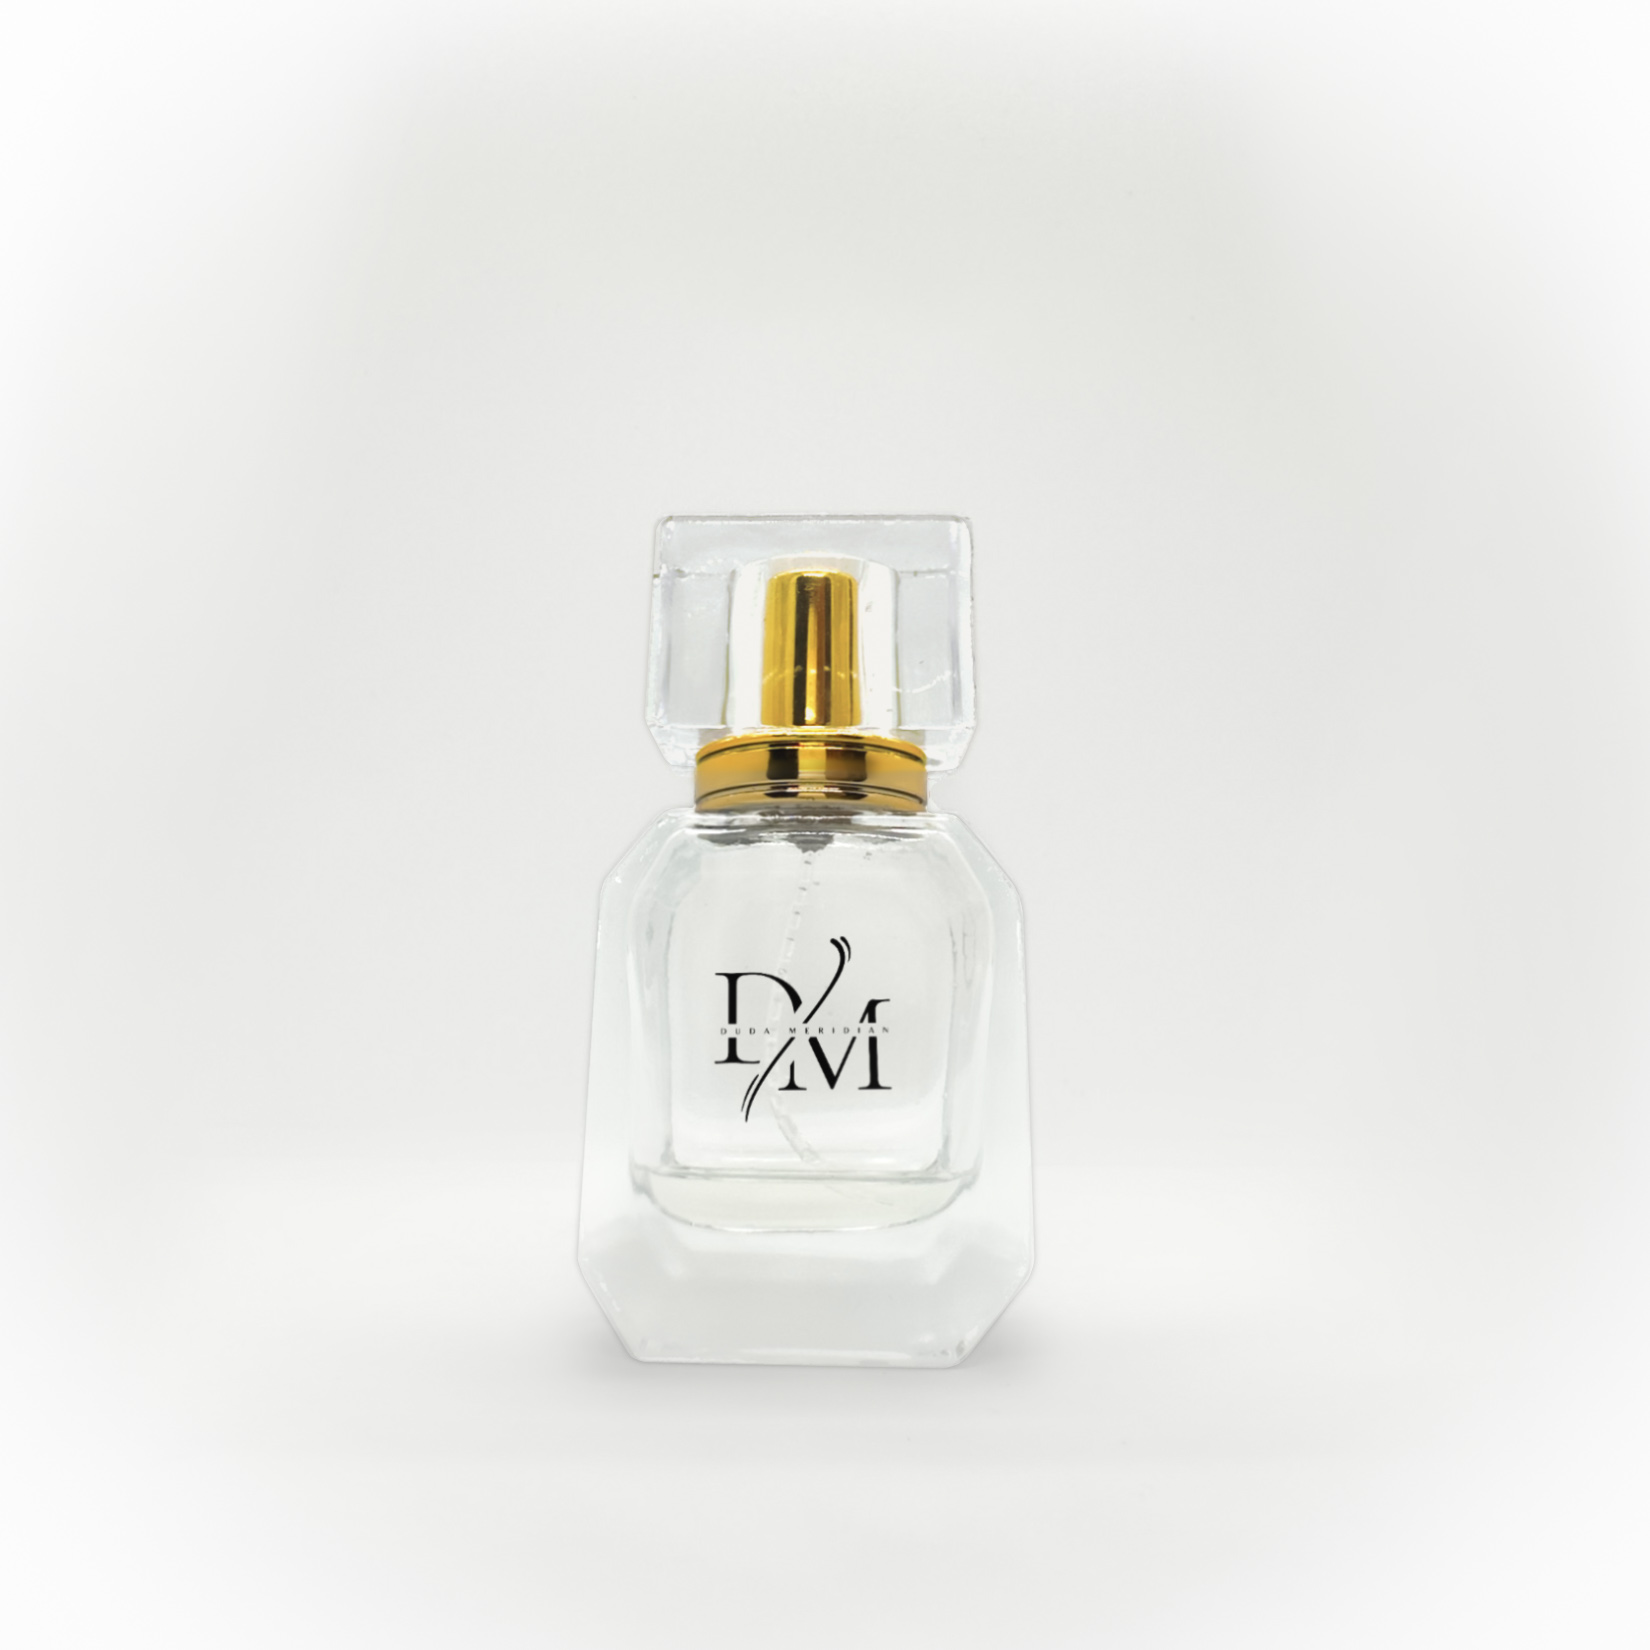 G4F181◆ Perfumer's Shop レディデューク Lady Duke オーデコロン EDC 香水 85ml